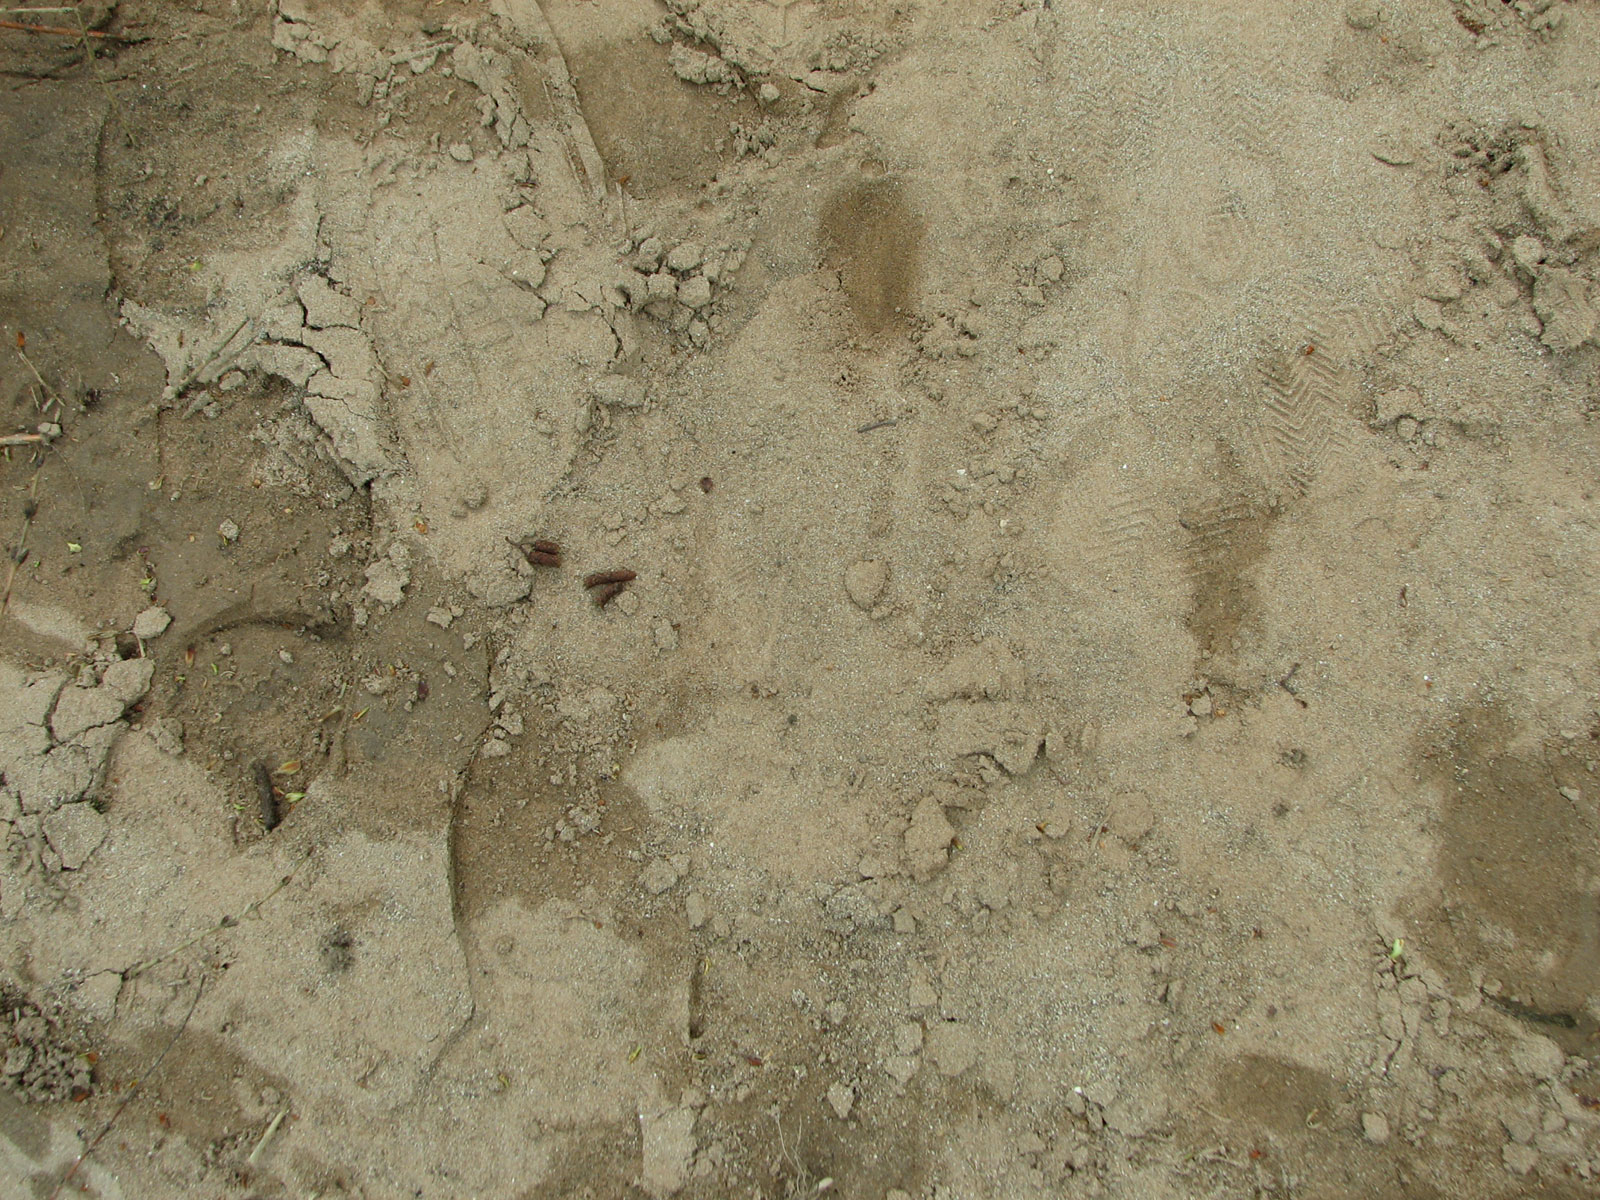 Sand-tracks-01 for 1600 x 1200 resolution